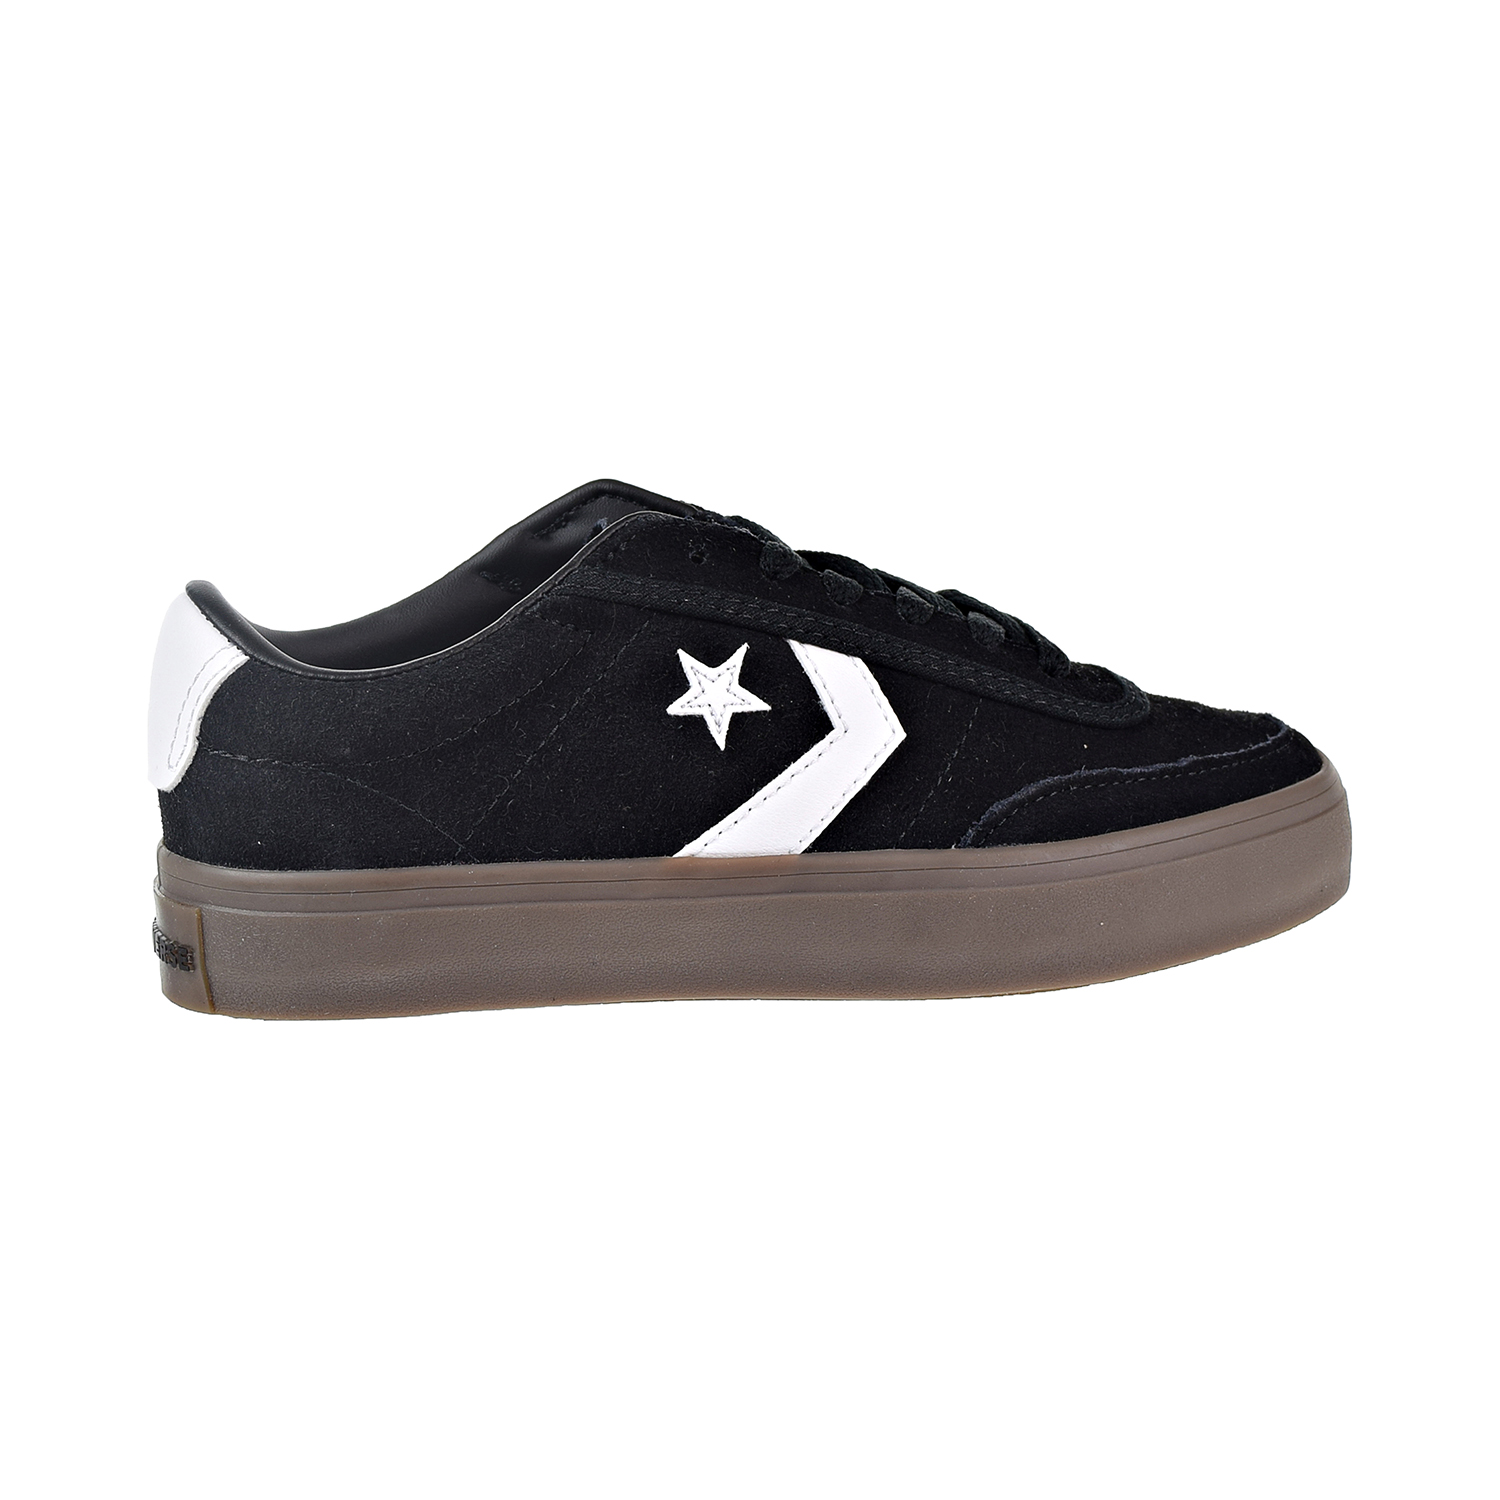 Converse Courtlandt OX Big Kids'/Men's Shoes Black-White-Brown 162570c - image 1 of 6